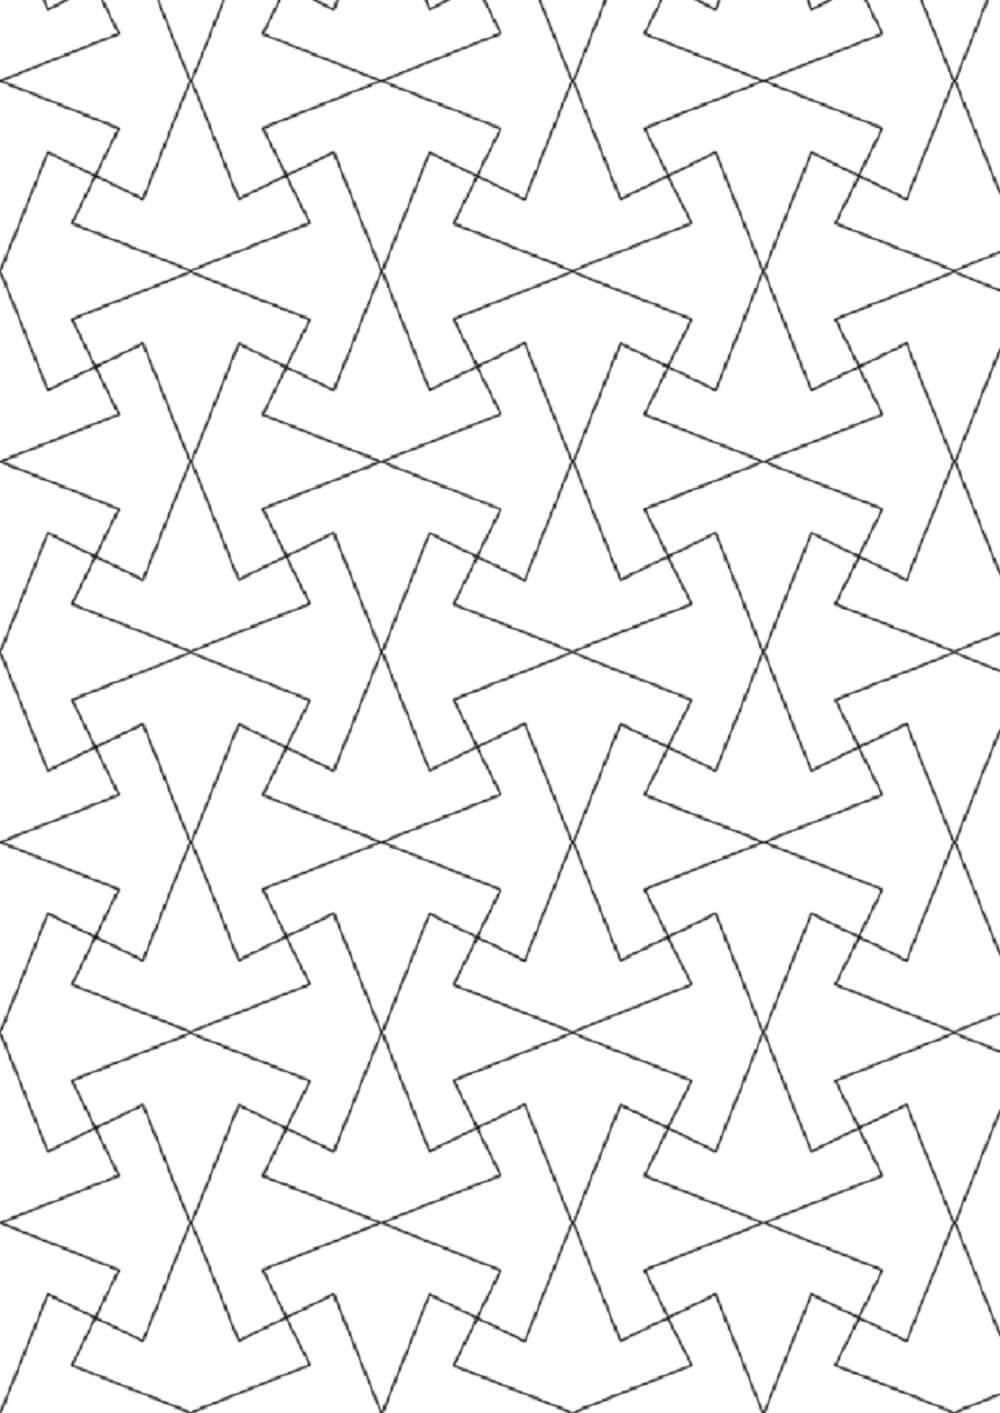 Tessellation art parametric house